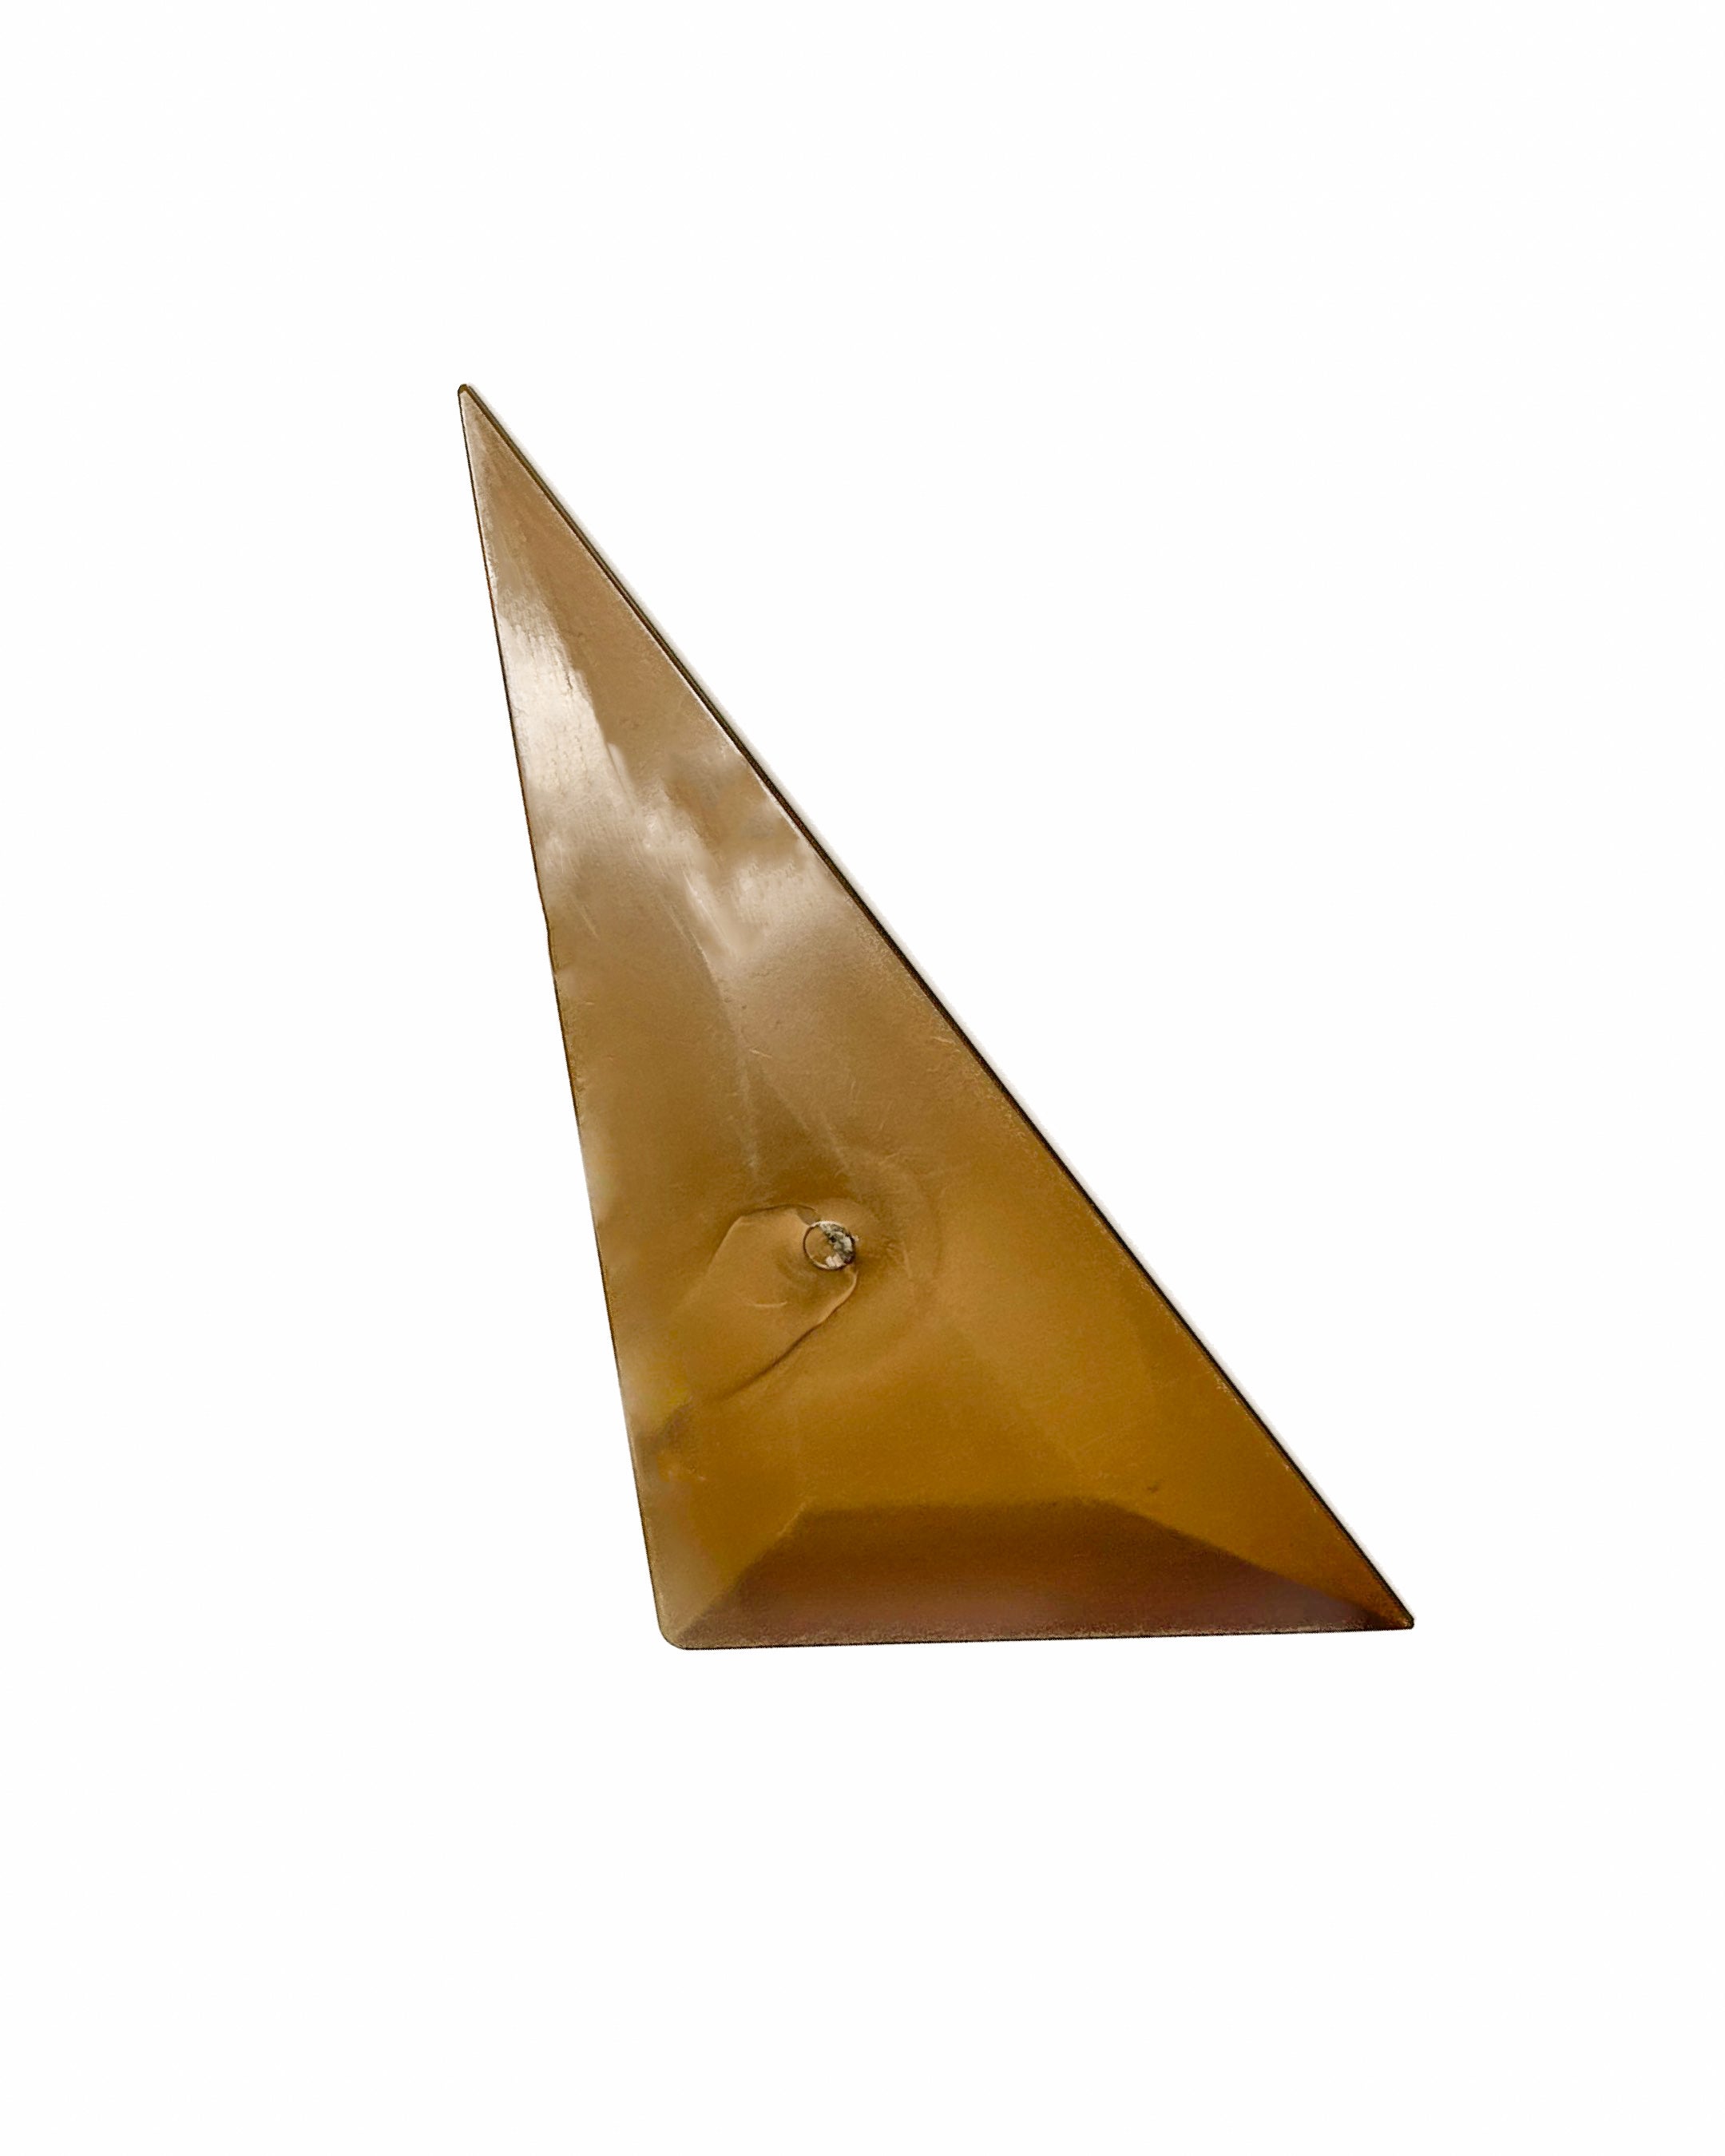 Bronze Triangle Angled Hard Card (no brand)